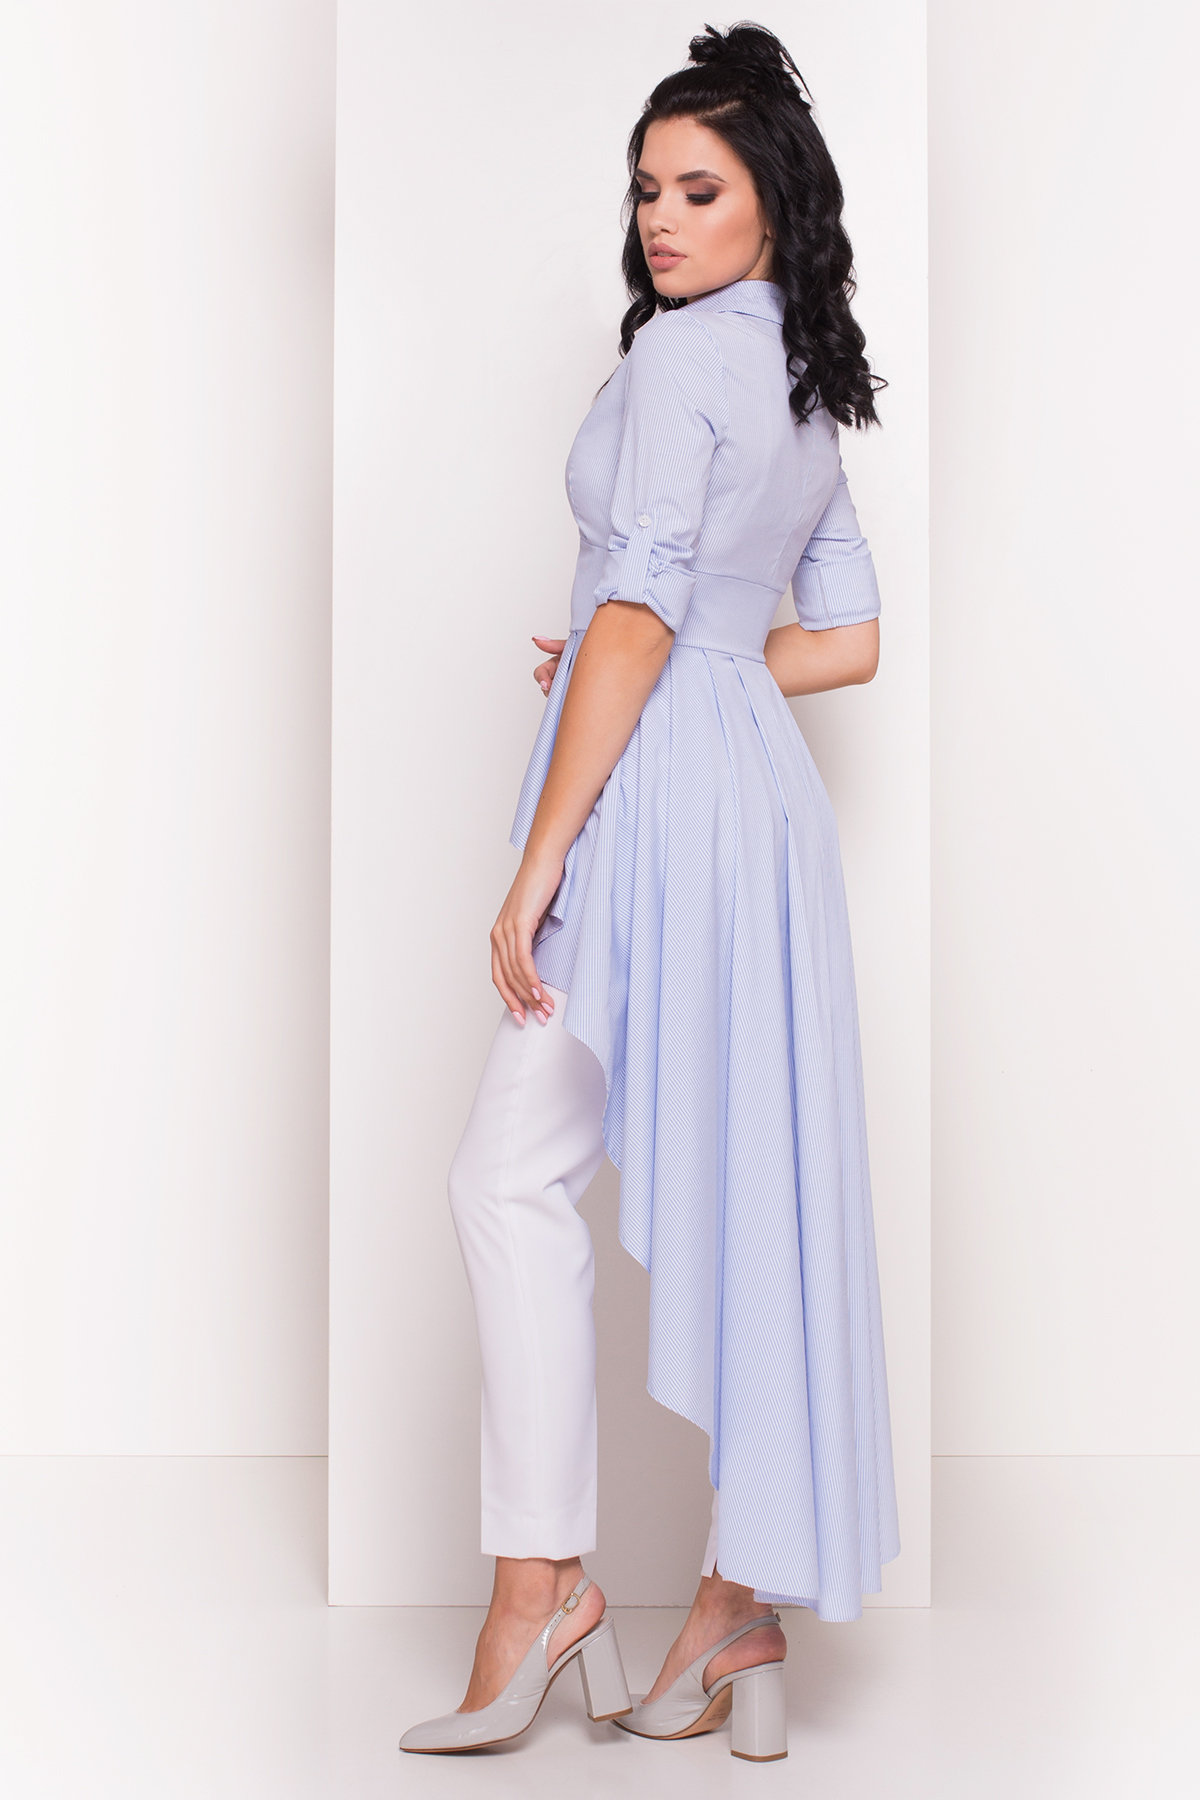 Платье-туника Феникс 5078 Цвет: Голубой/белый